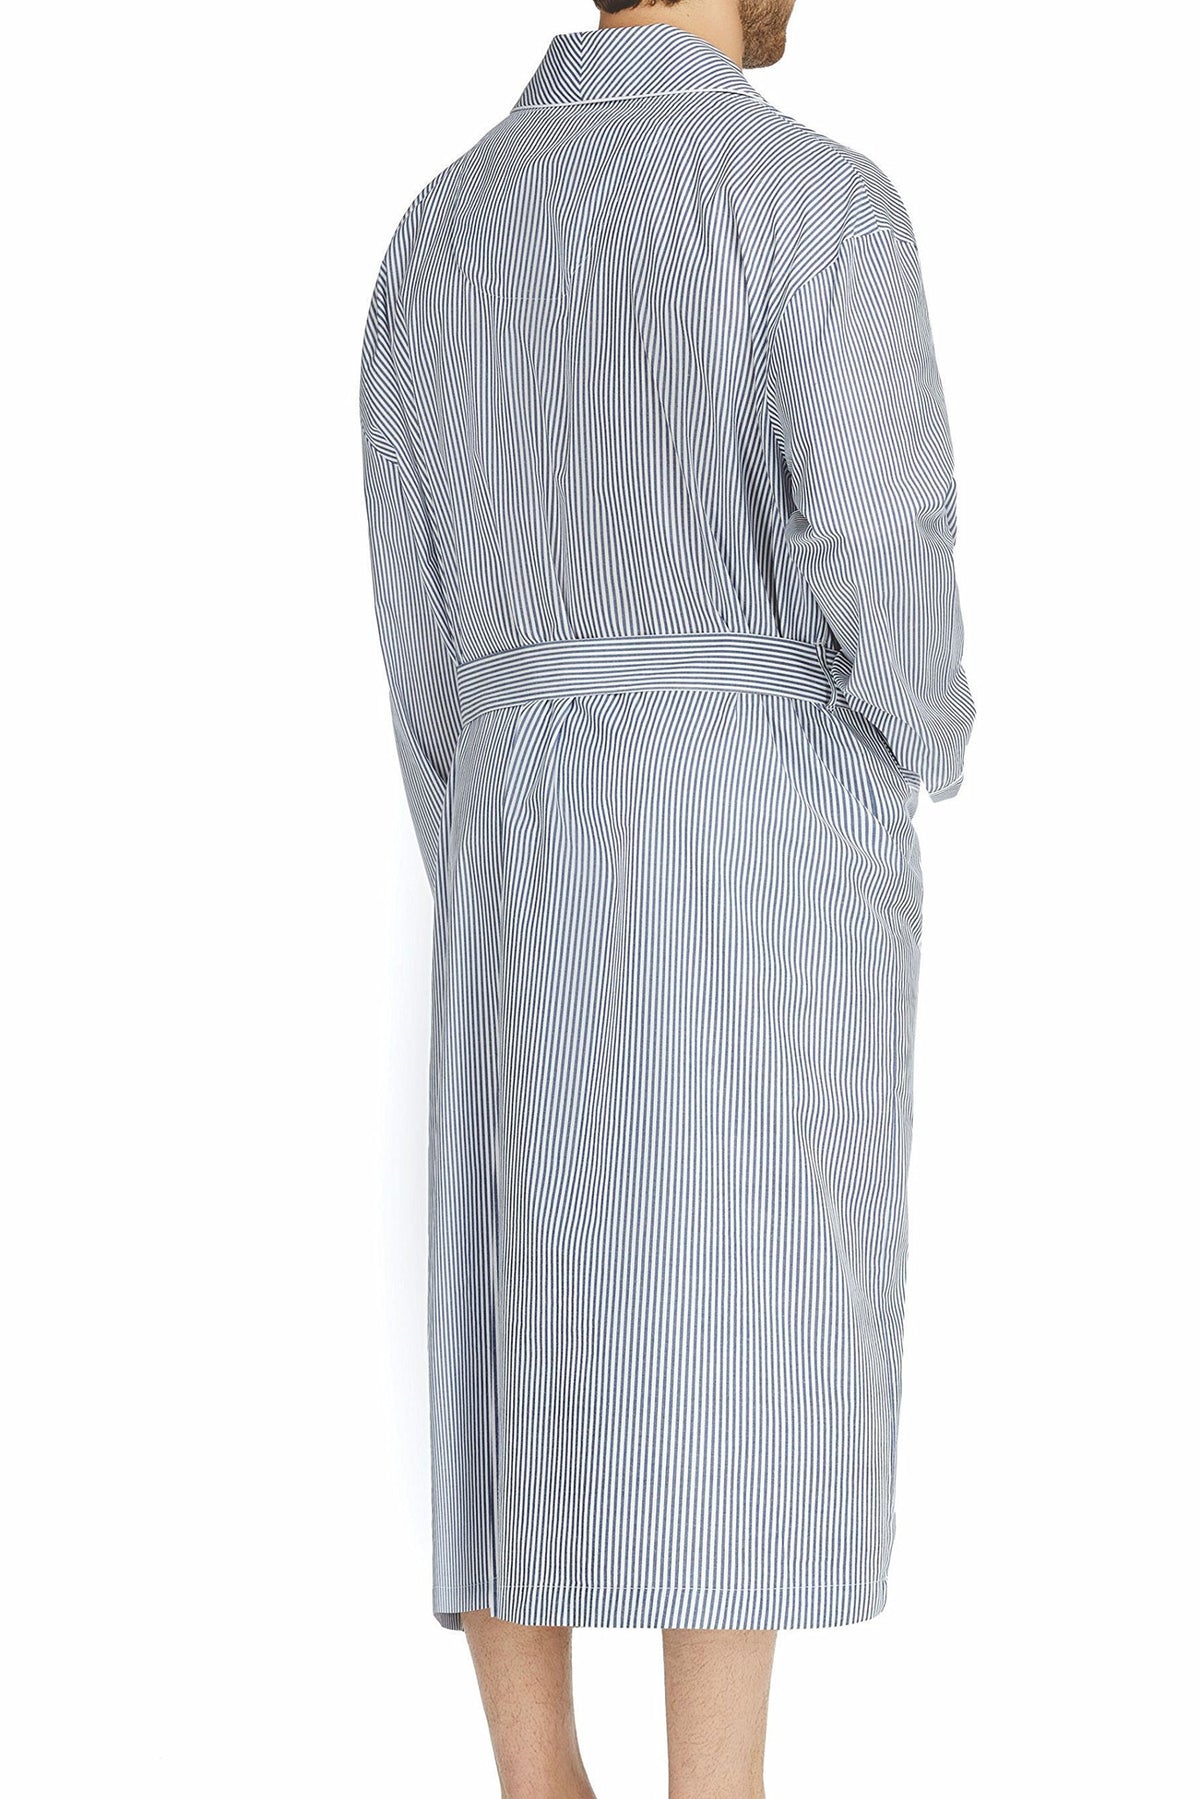 Cobalt Woven Shawl Robe